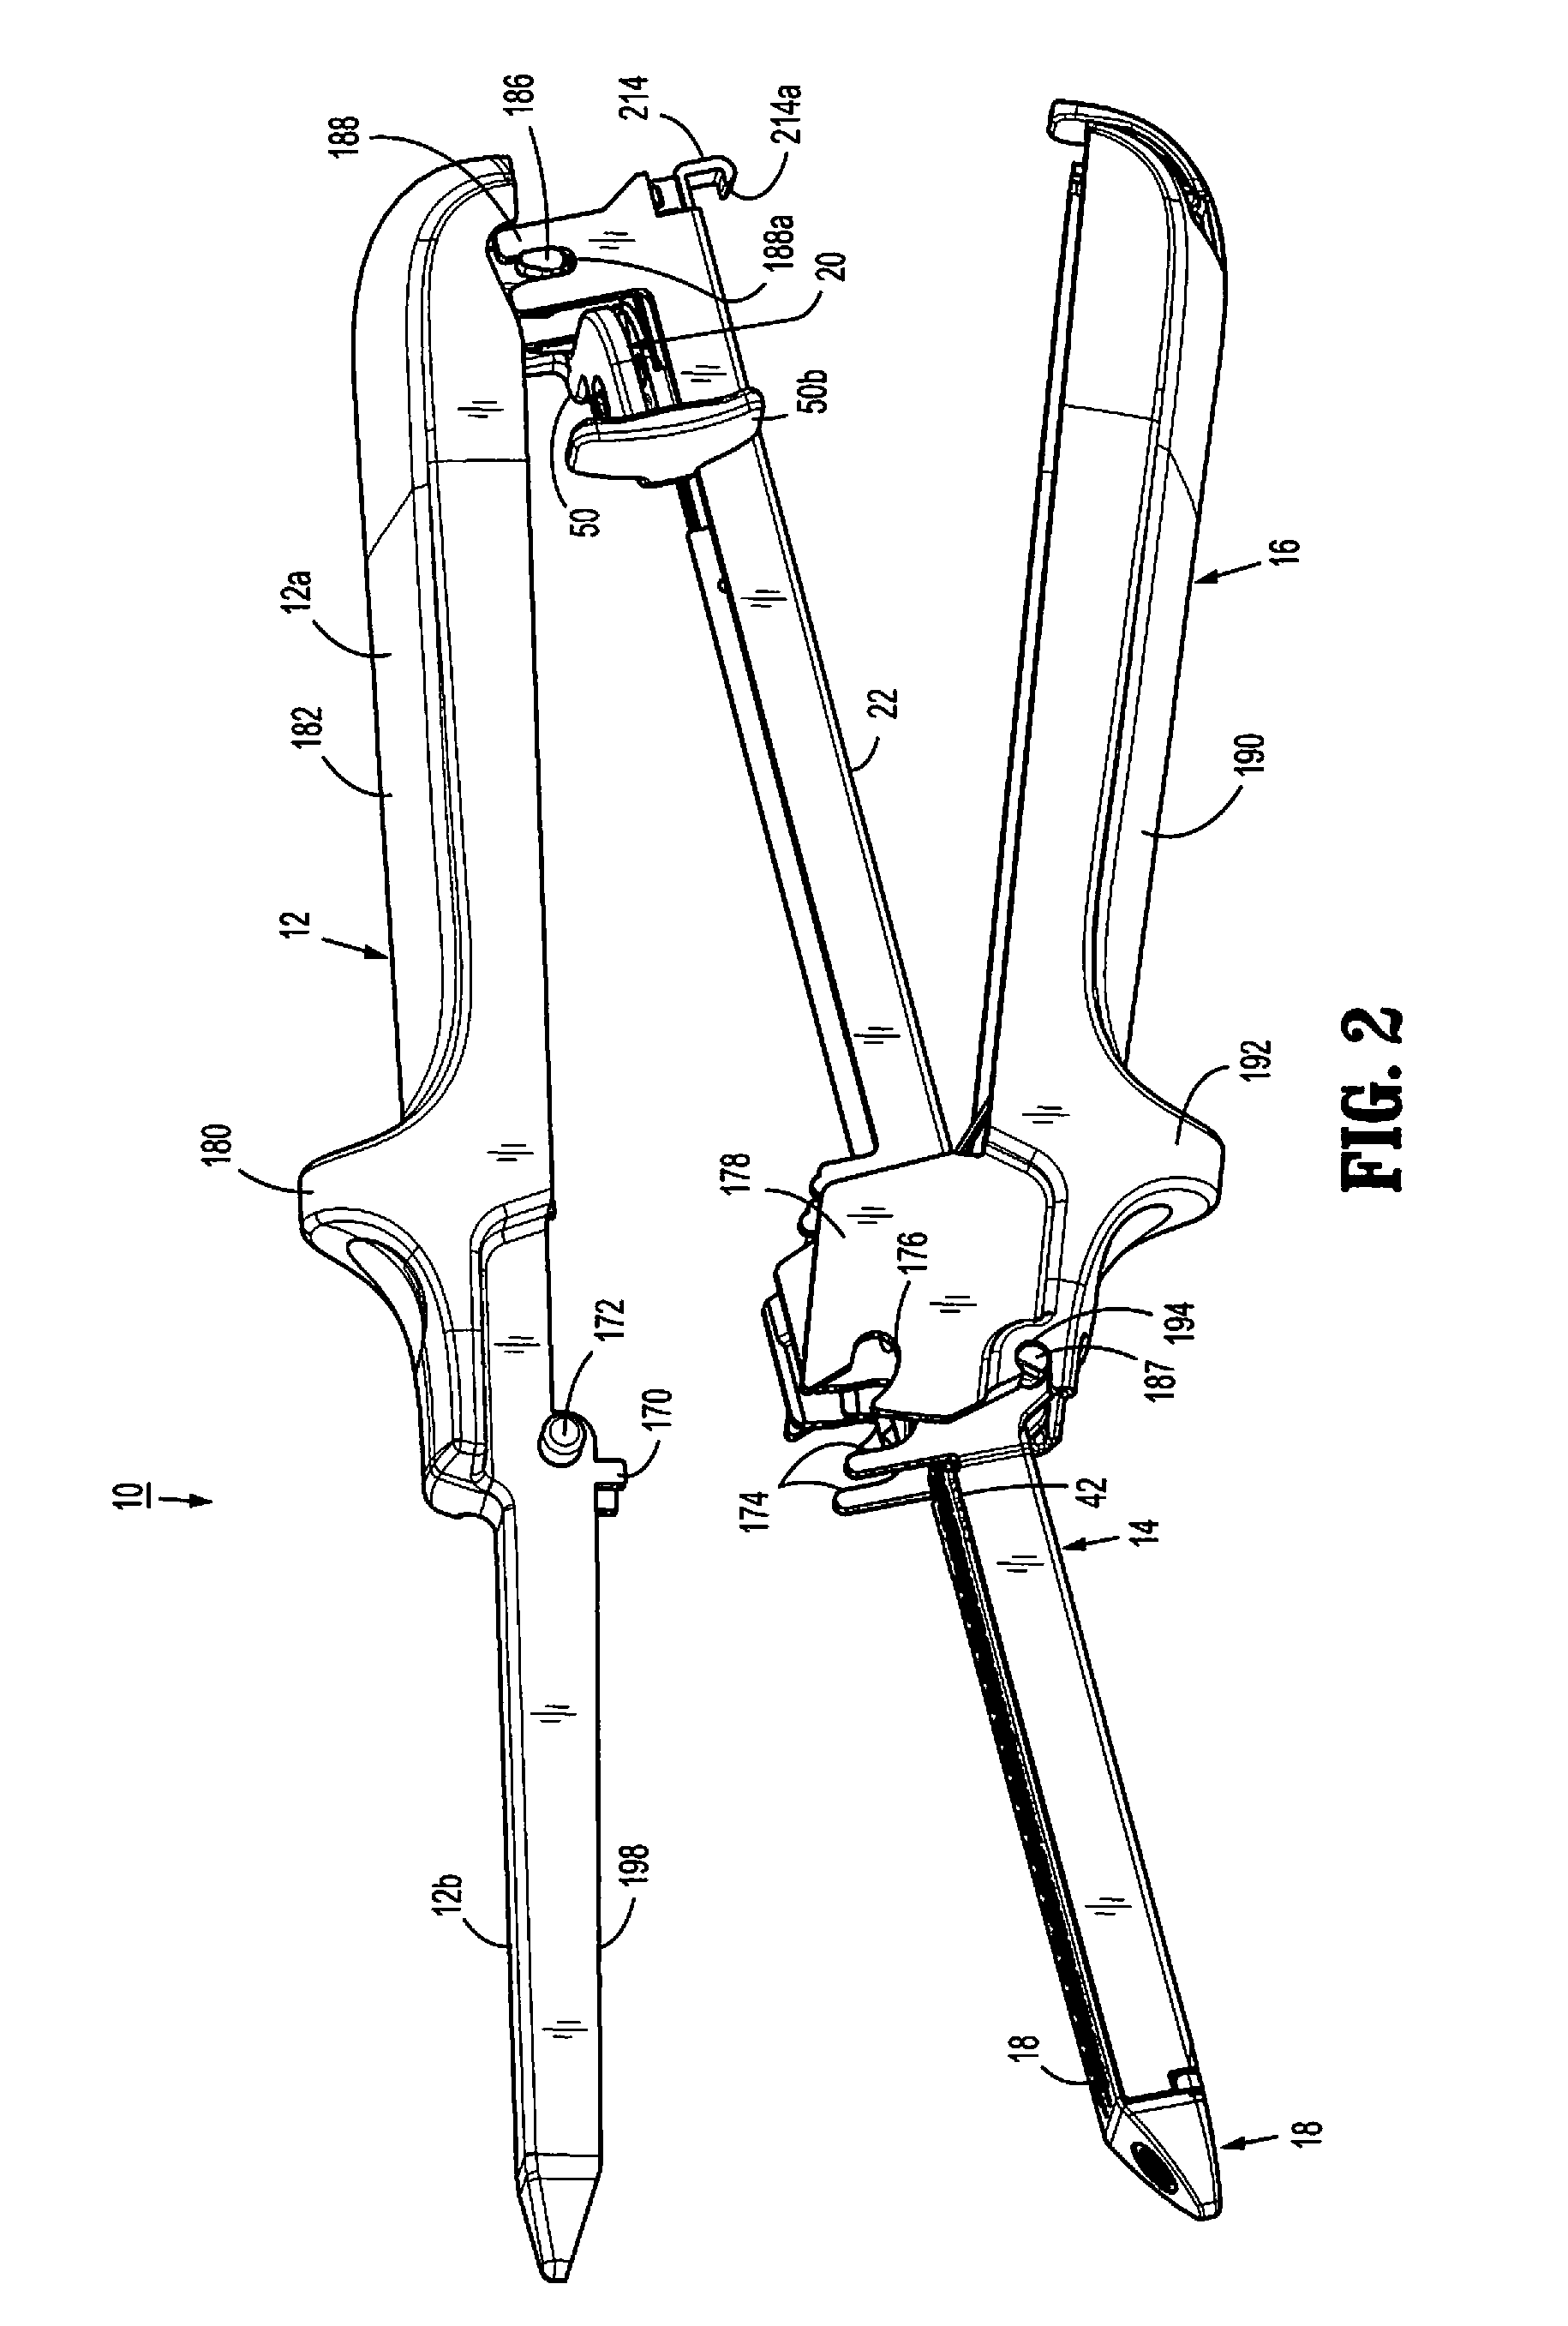 Surgical fastener applying apparatus